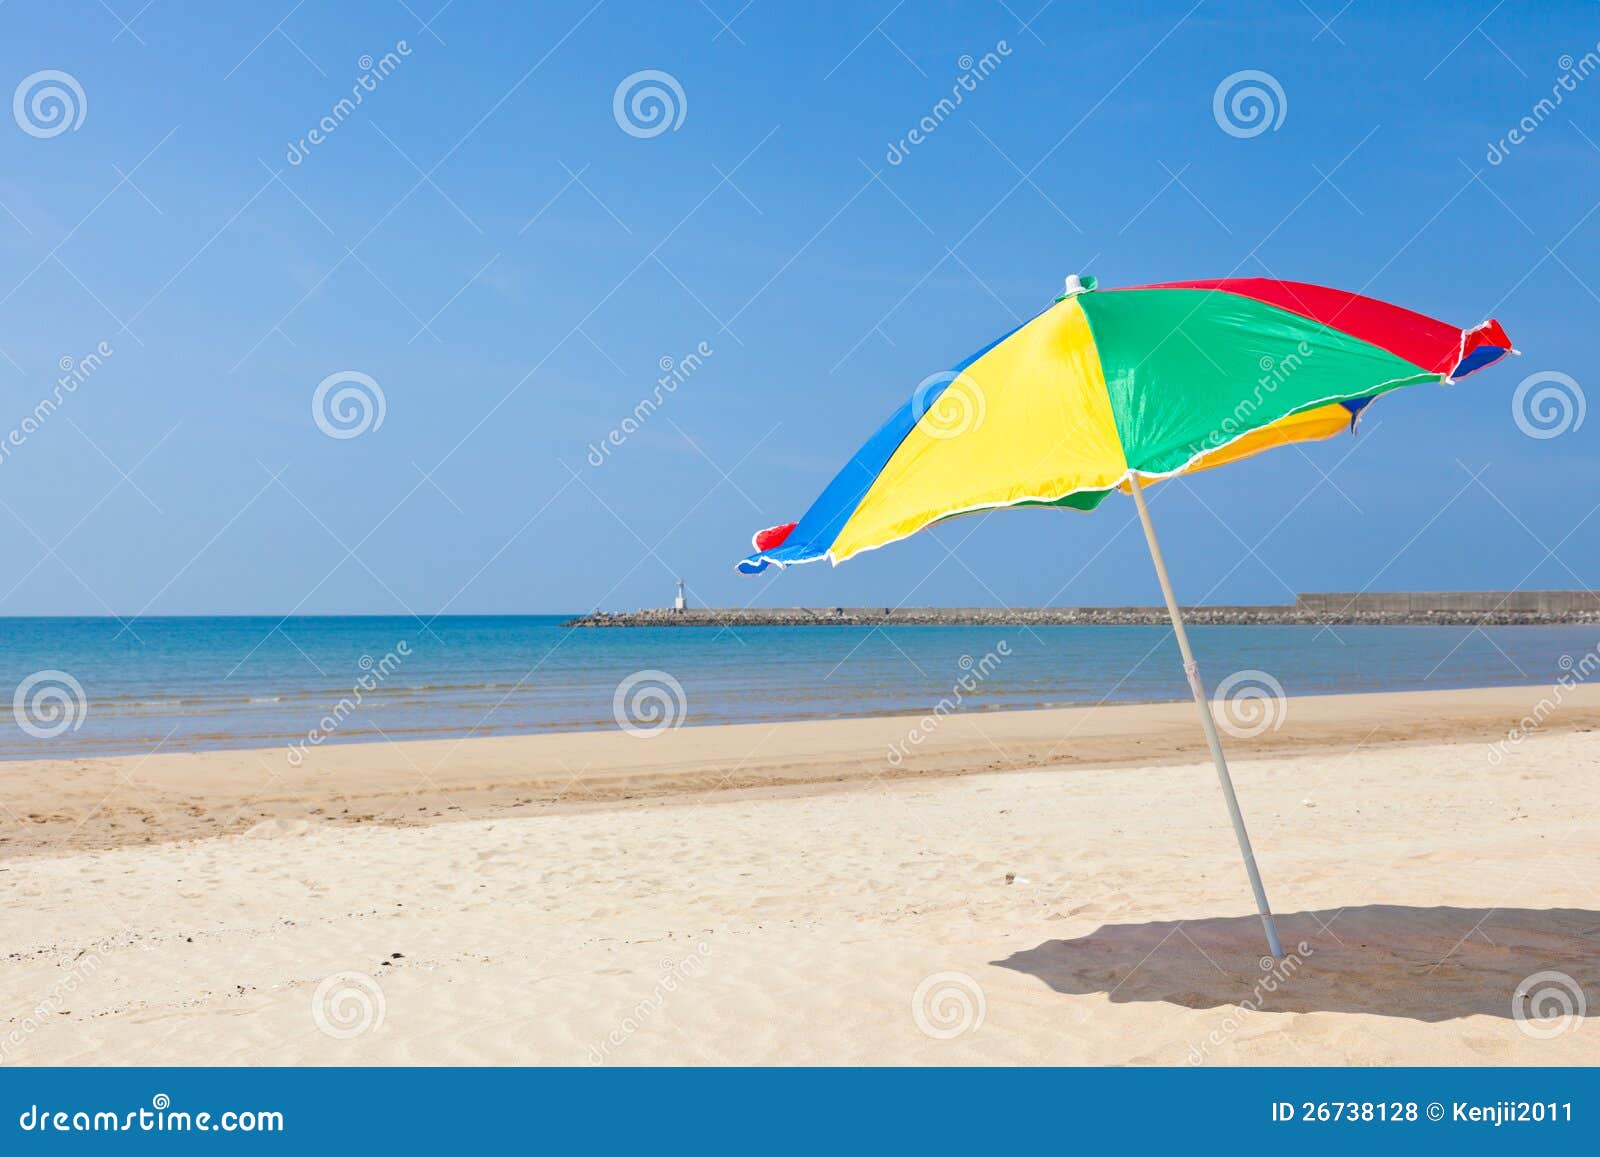 Seaside beach umbrella stock photo. Image of beach, relaxation - 26738128